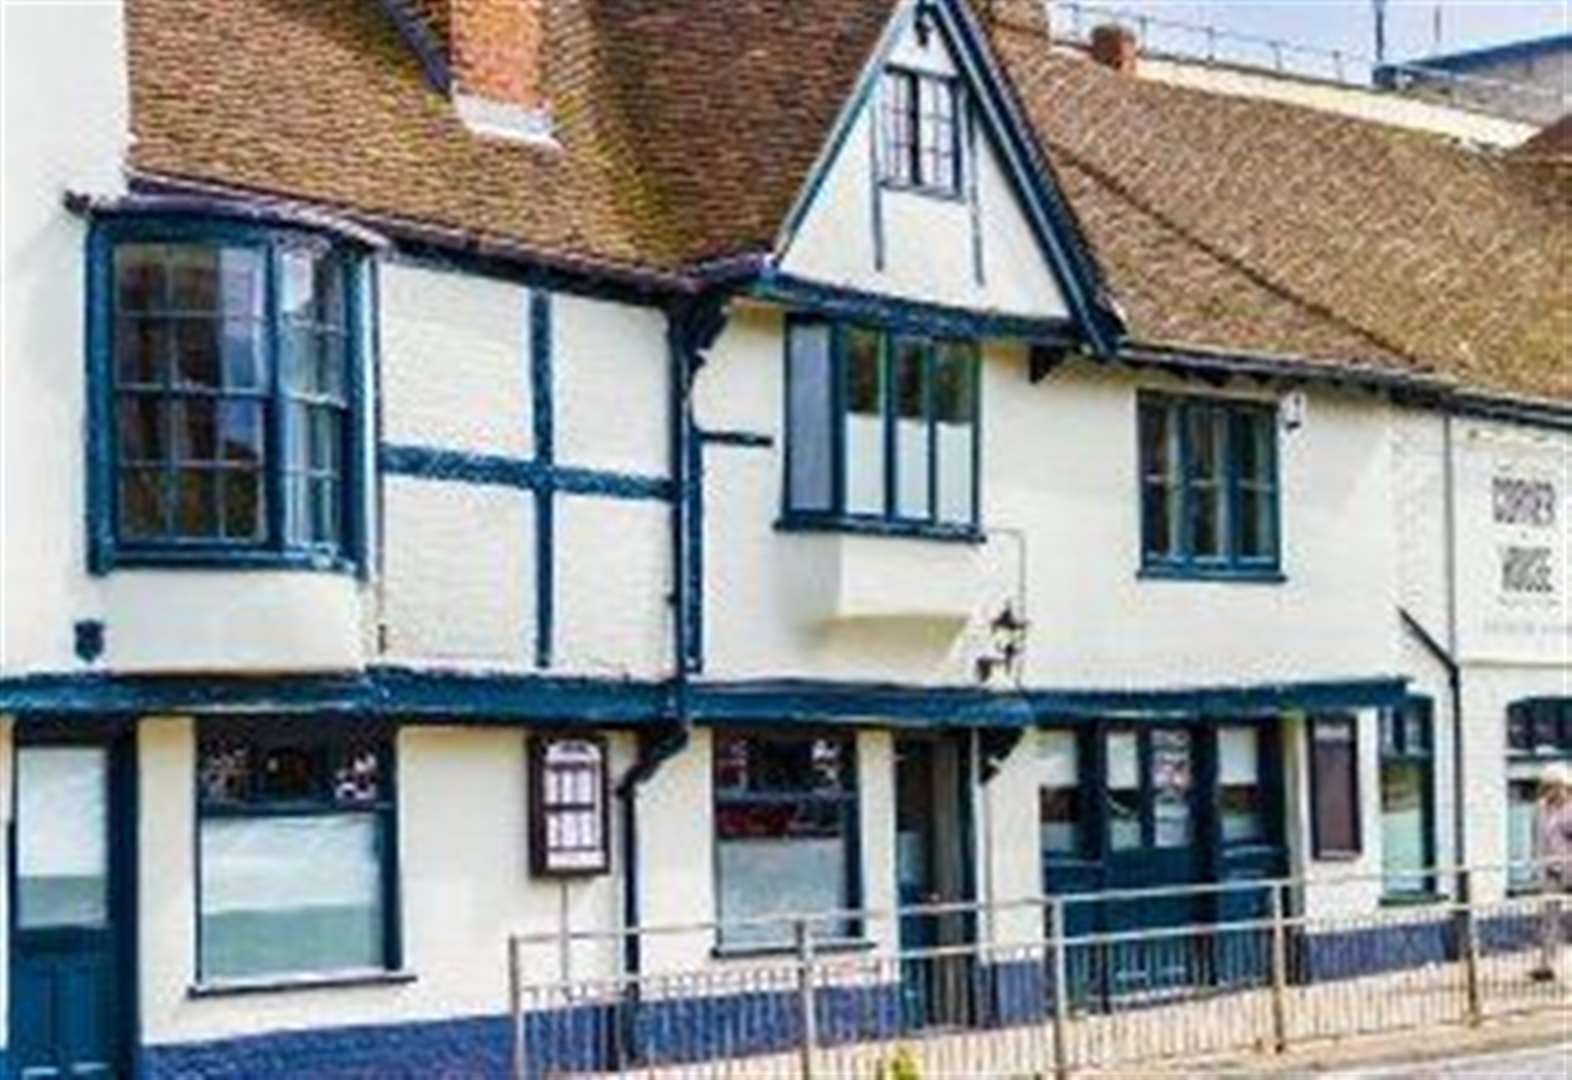 TripAdvisor ranks Kent restaurant in UK top 10